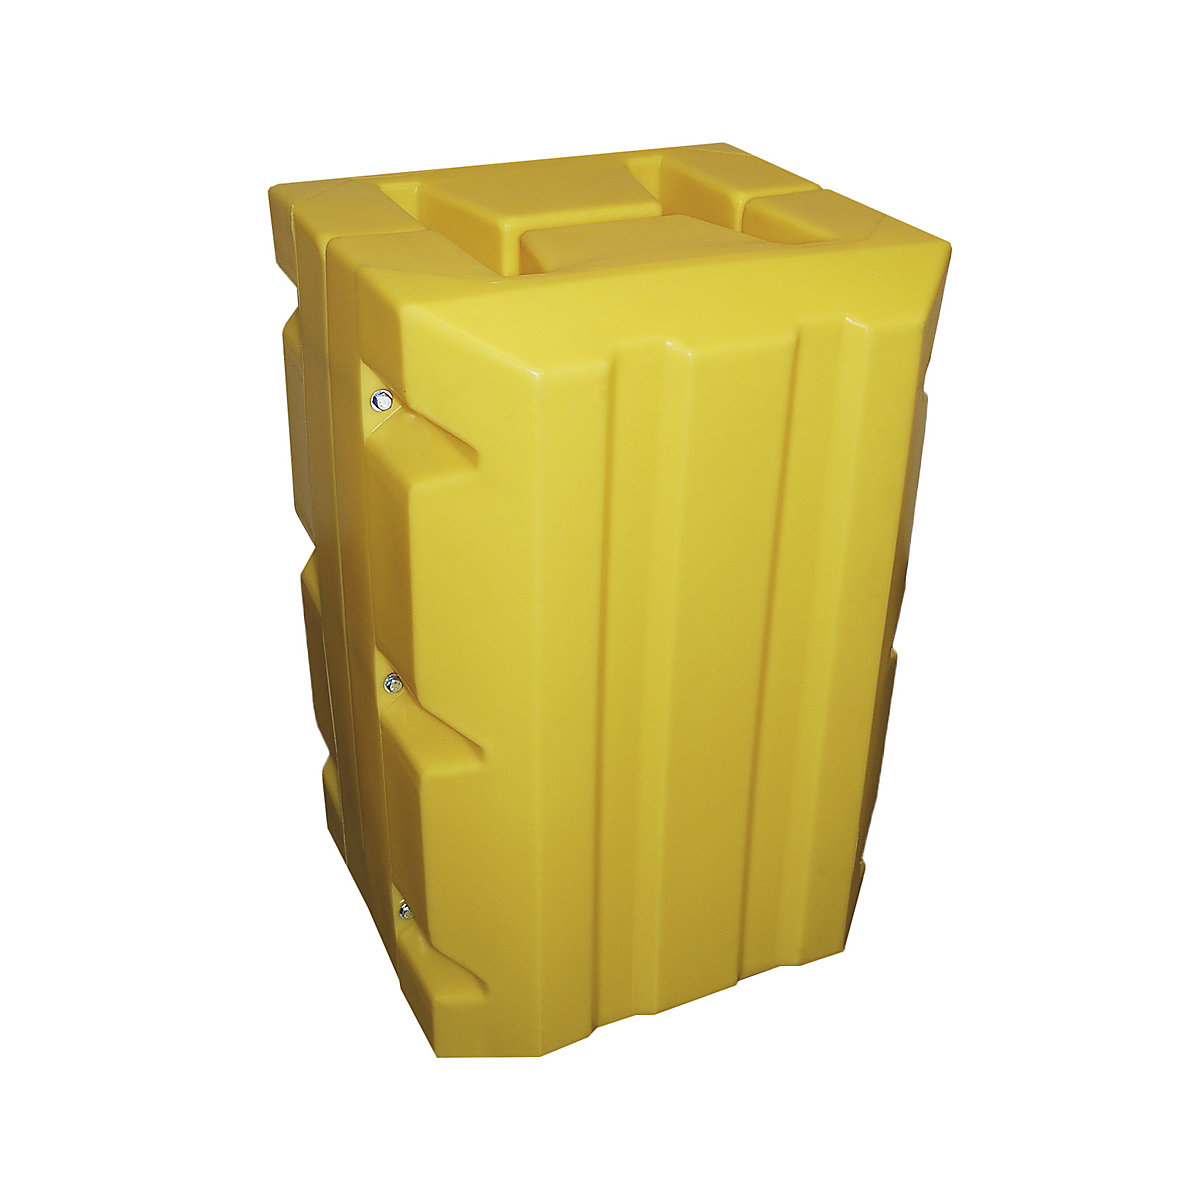 Zuil- en paalbeschermingen, van polyethyleen, geel, l x b x h = 695 x 640 x 1000 mm, binnenafmetingen 390 x 410 mm-3